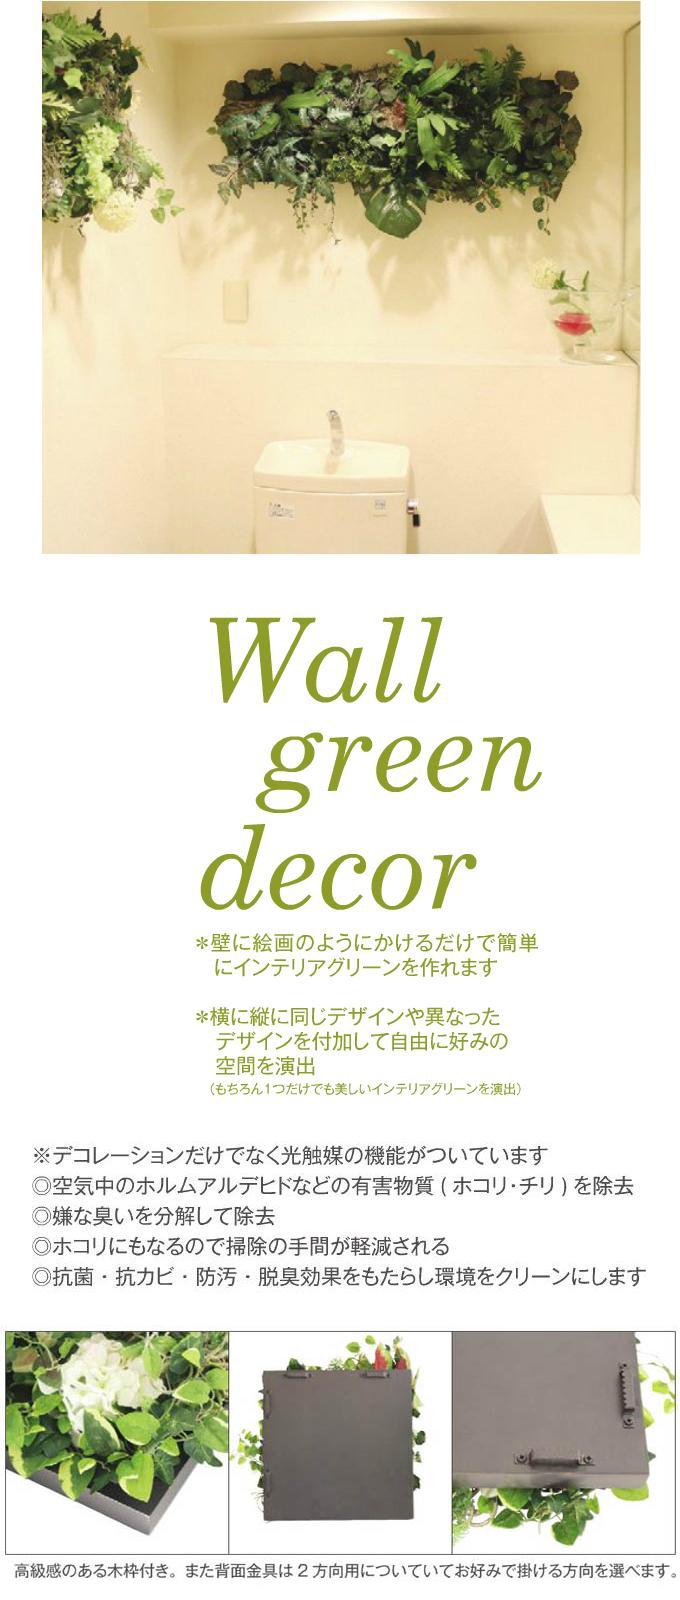 “Green